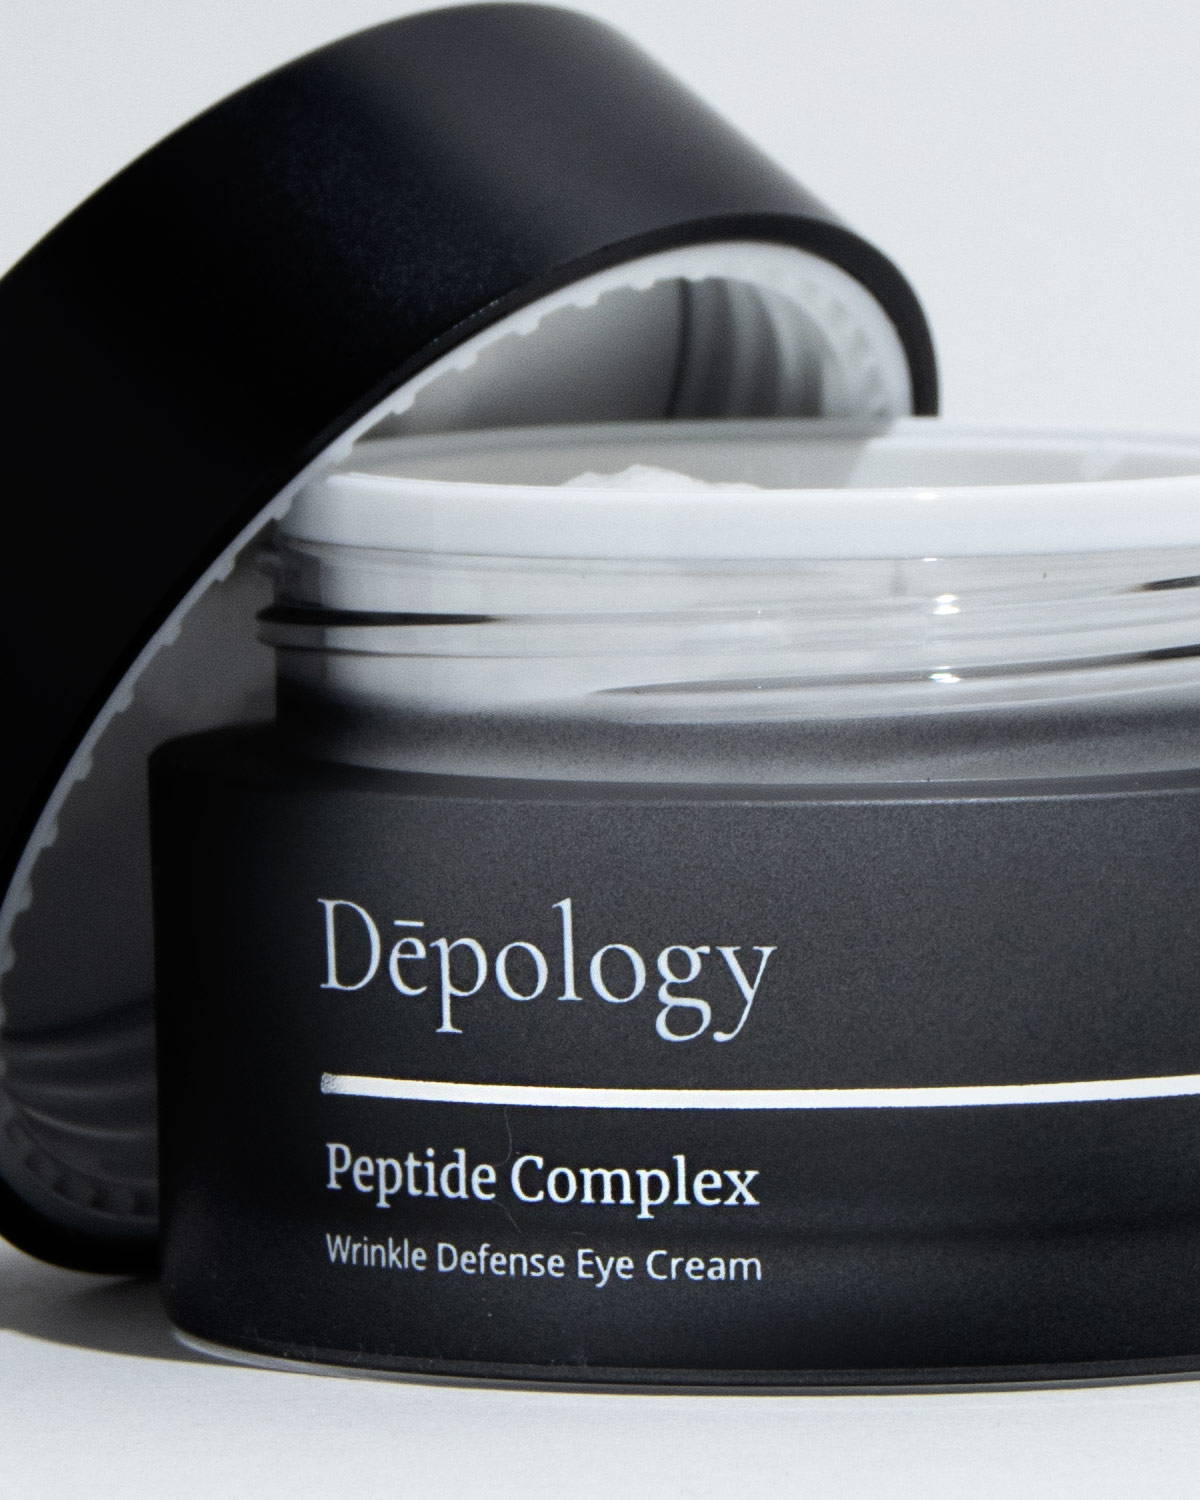 Depology Peptide complex wrinkle defense eye cream 